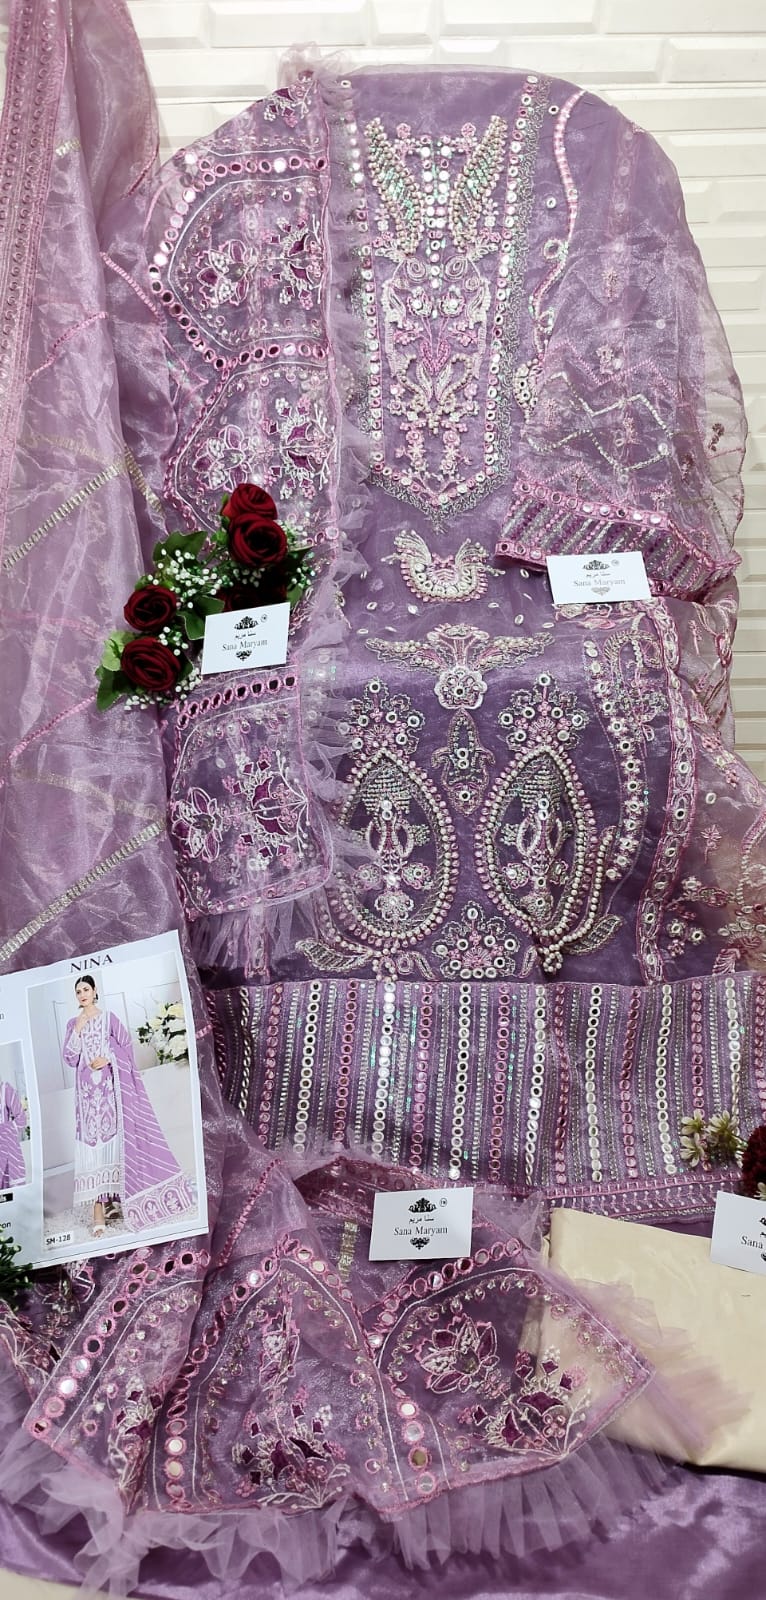 Sana Maryam Nina Sm 128 Pakistani Suits Catalog Lowest Price